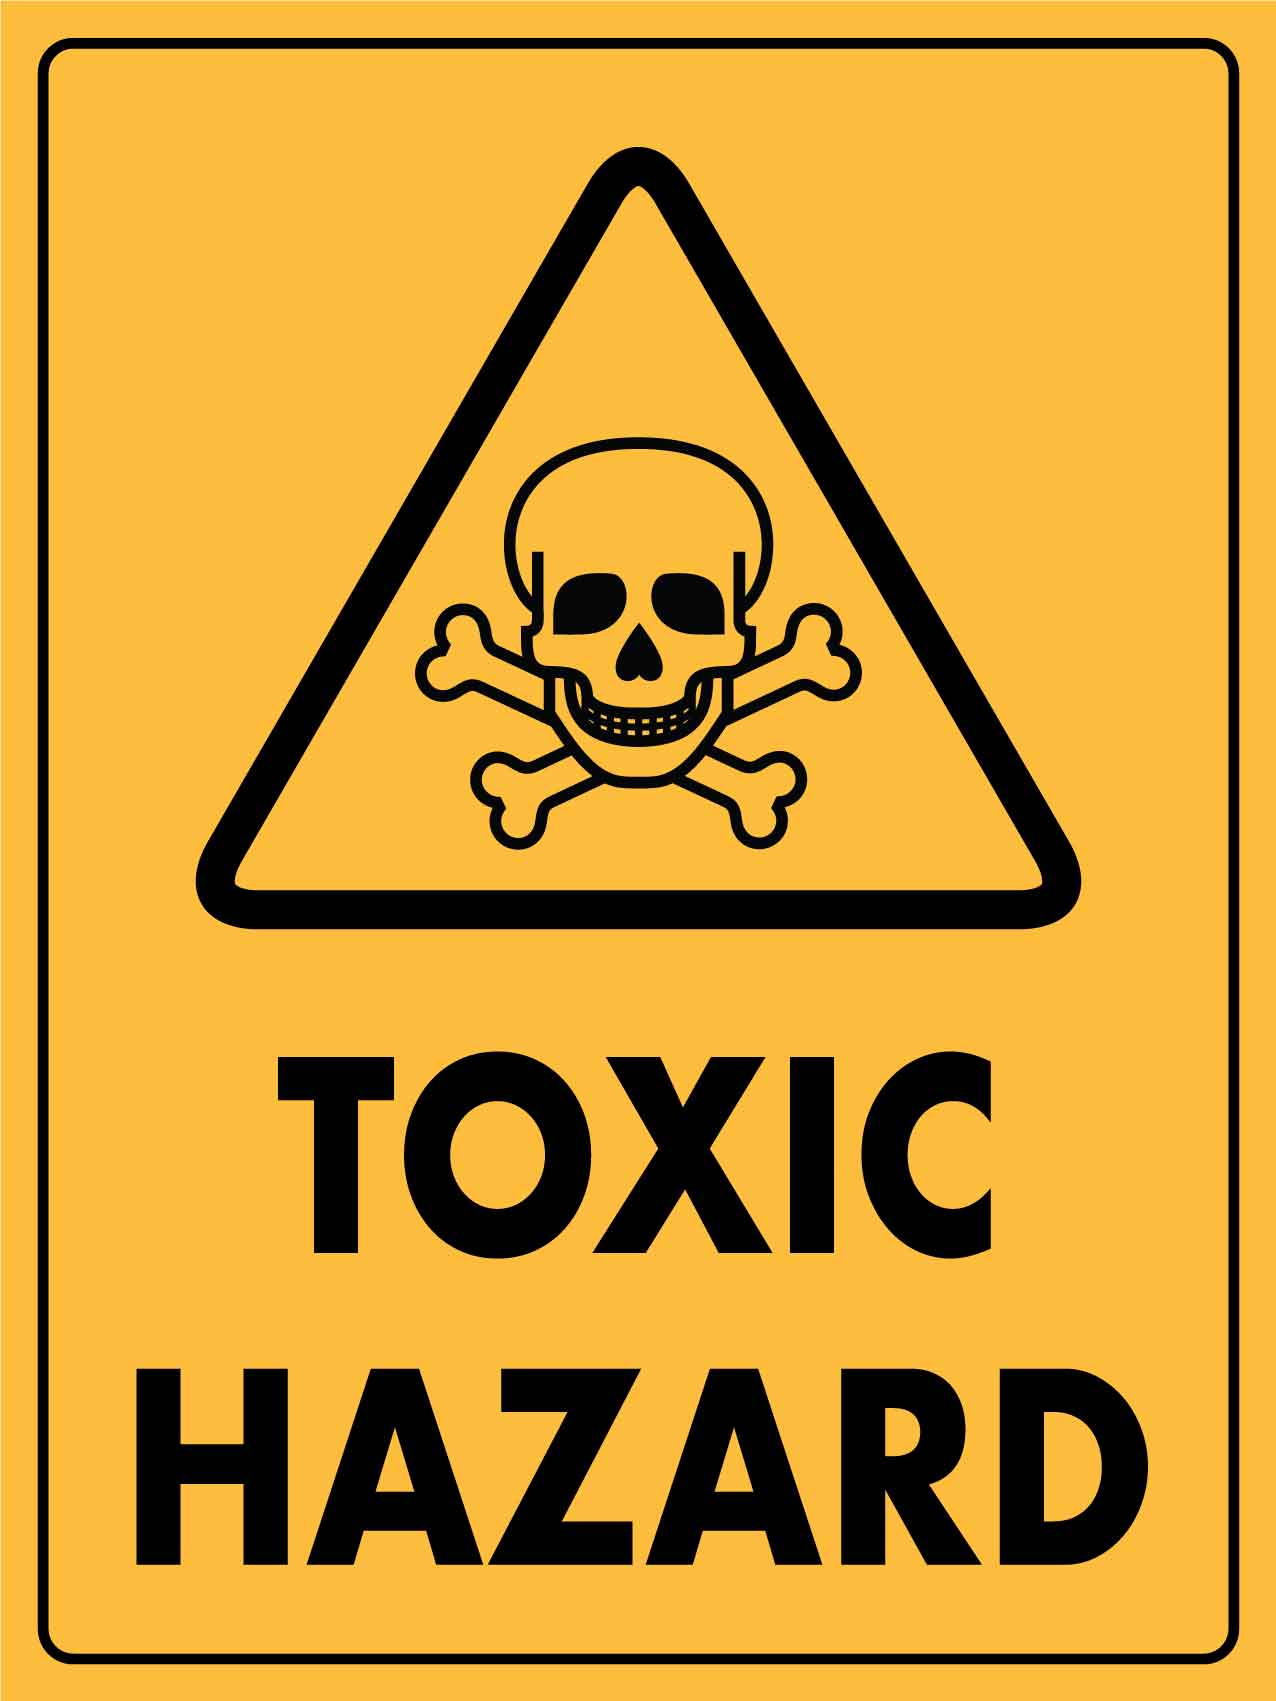 Caution Toxic Hazard Sign